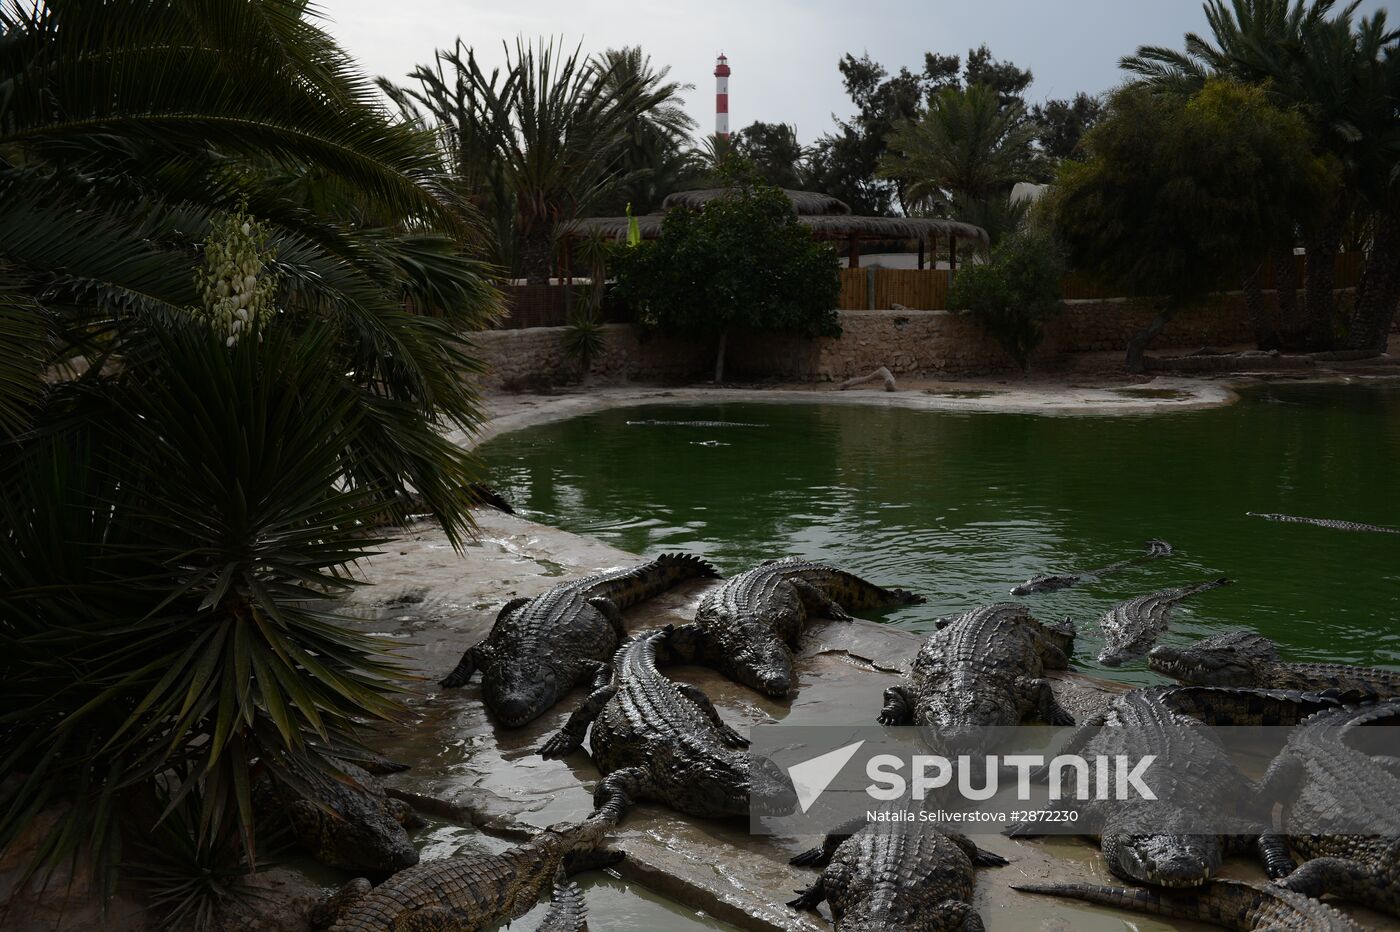 A crocodile farm on Djerba Island in Tunisia